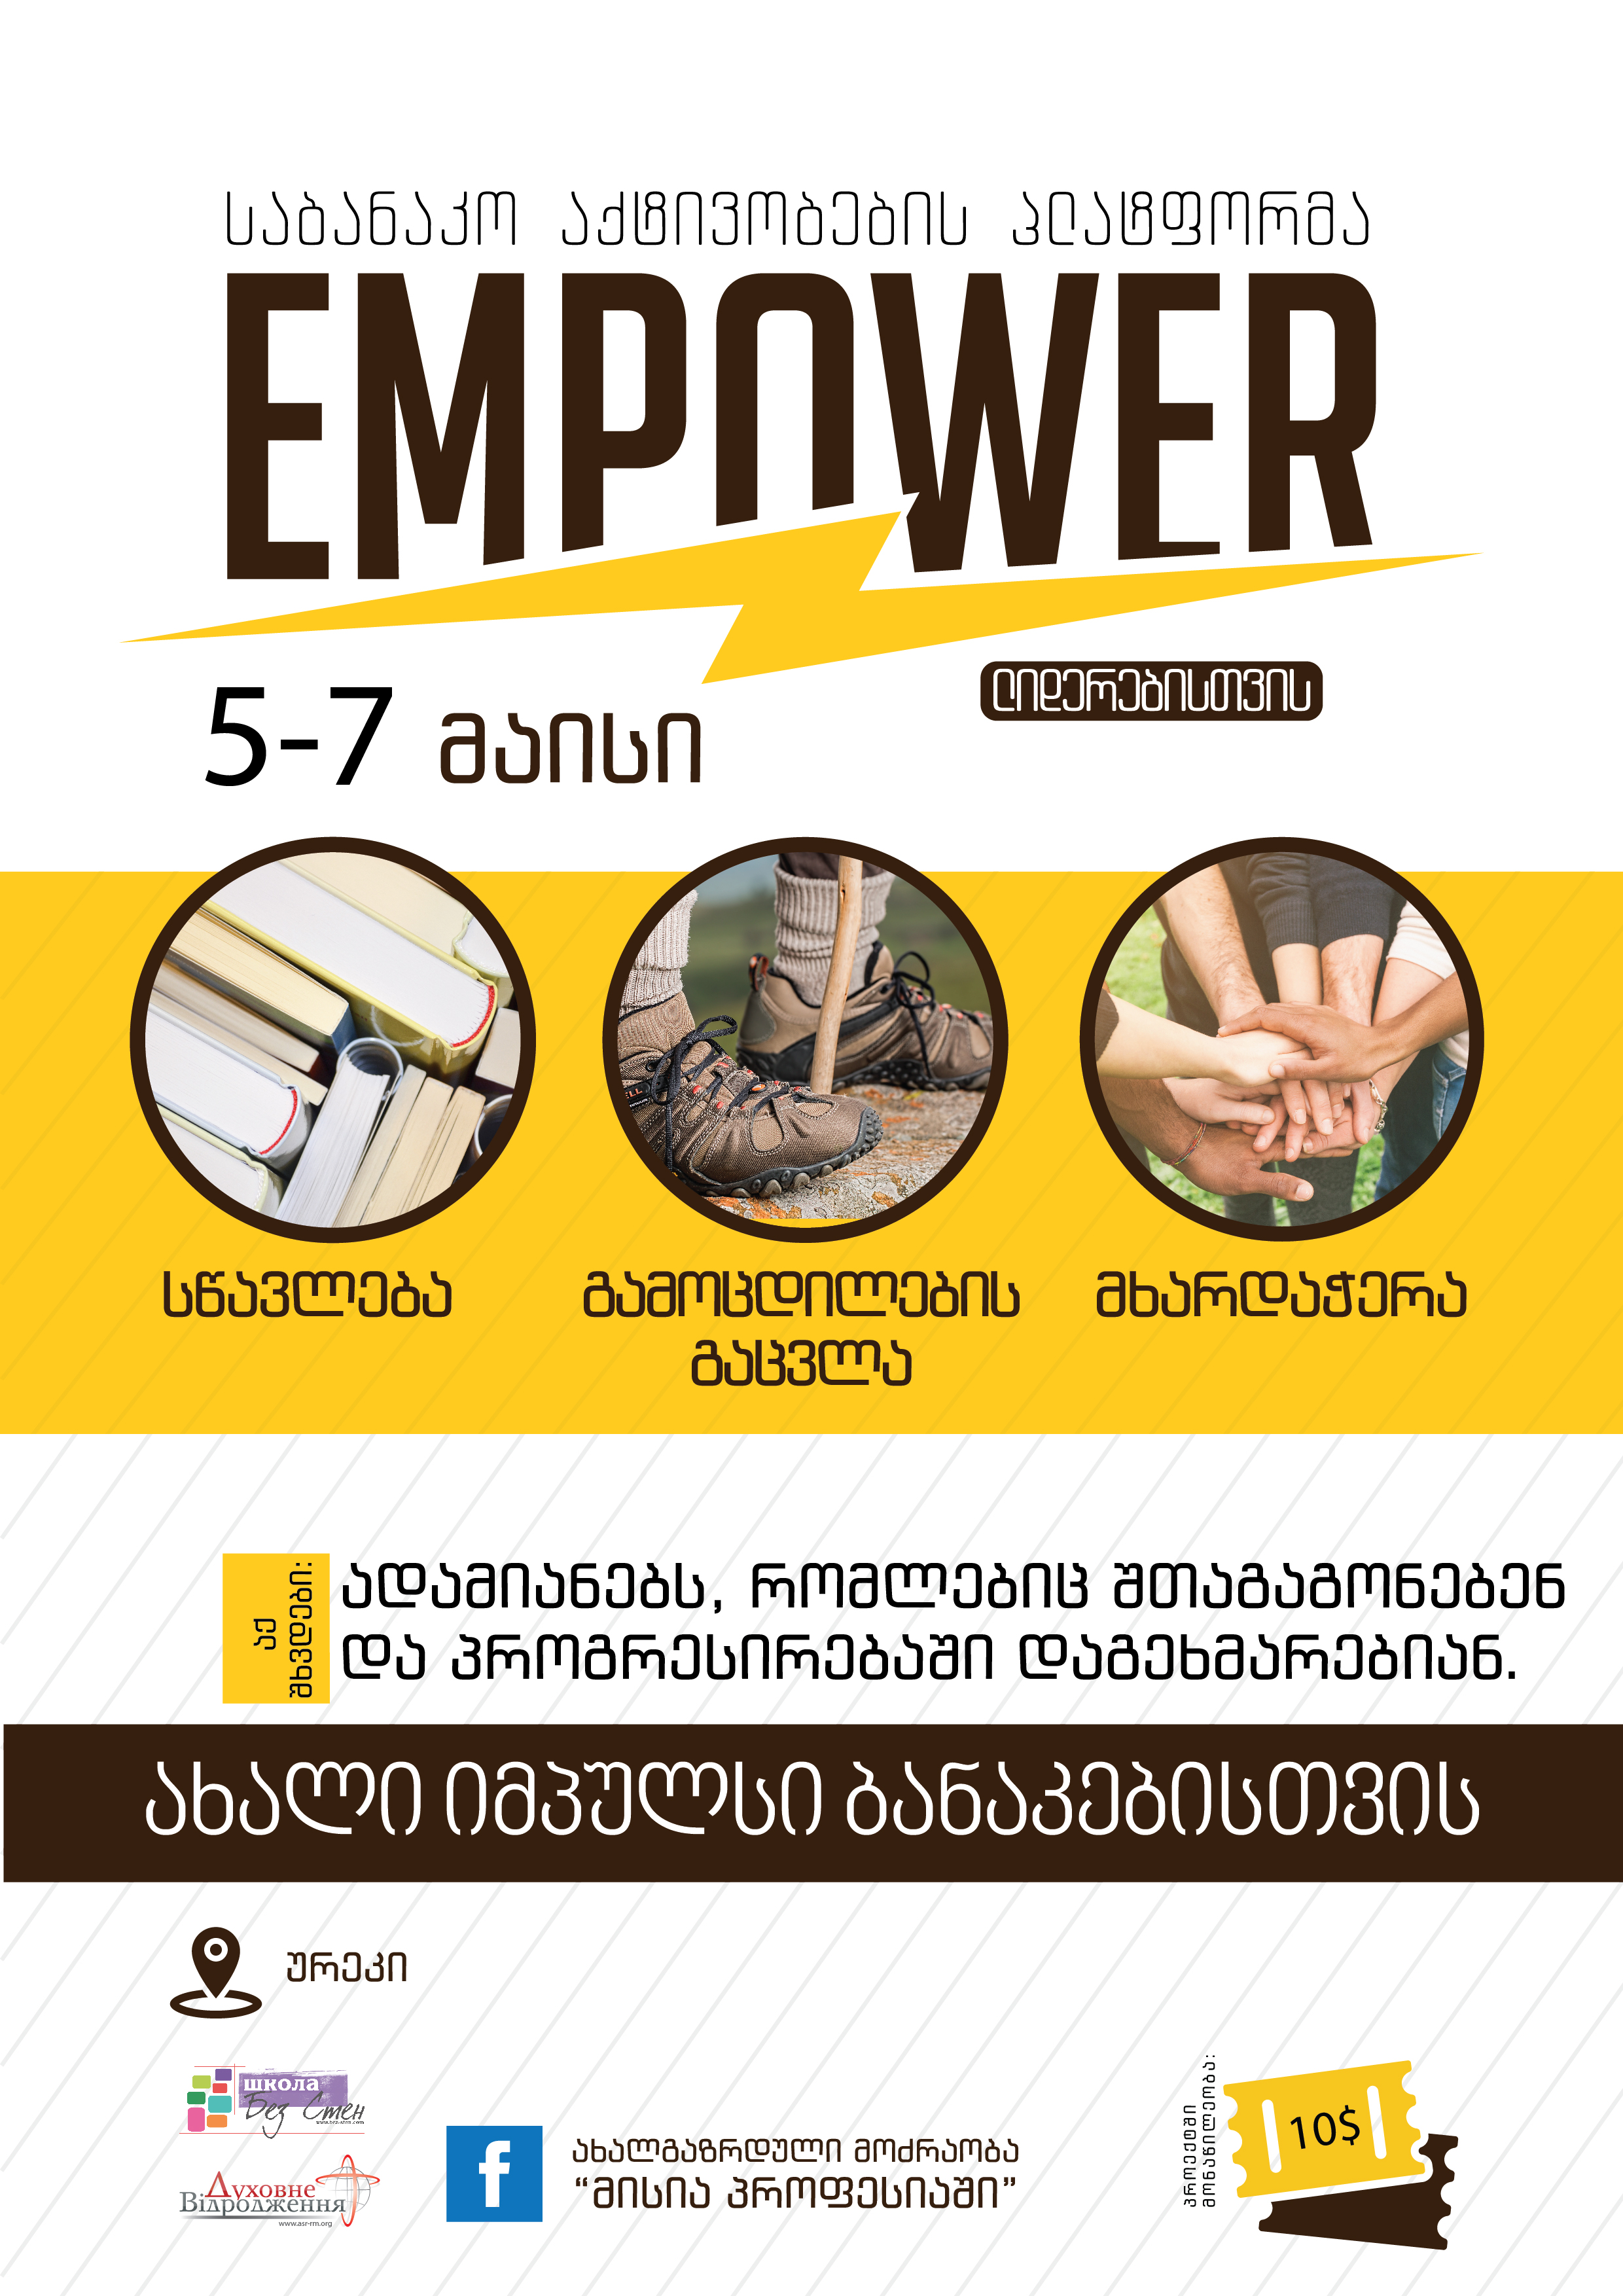 empower_poster_Moldova_photo GEO-01